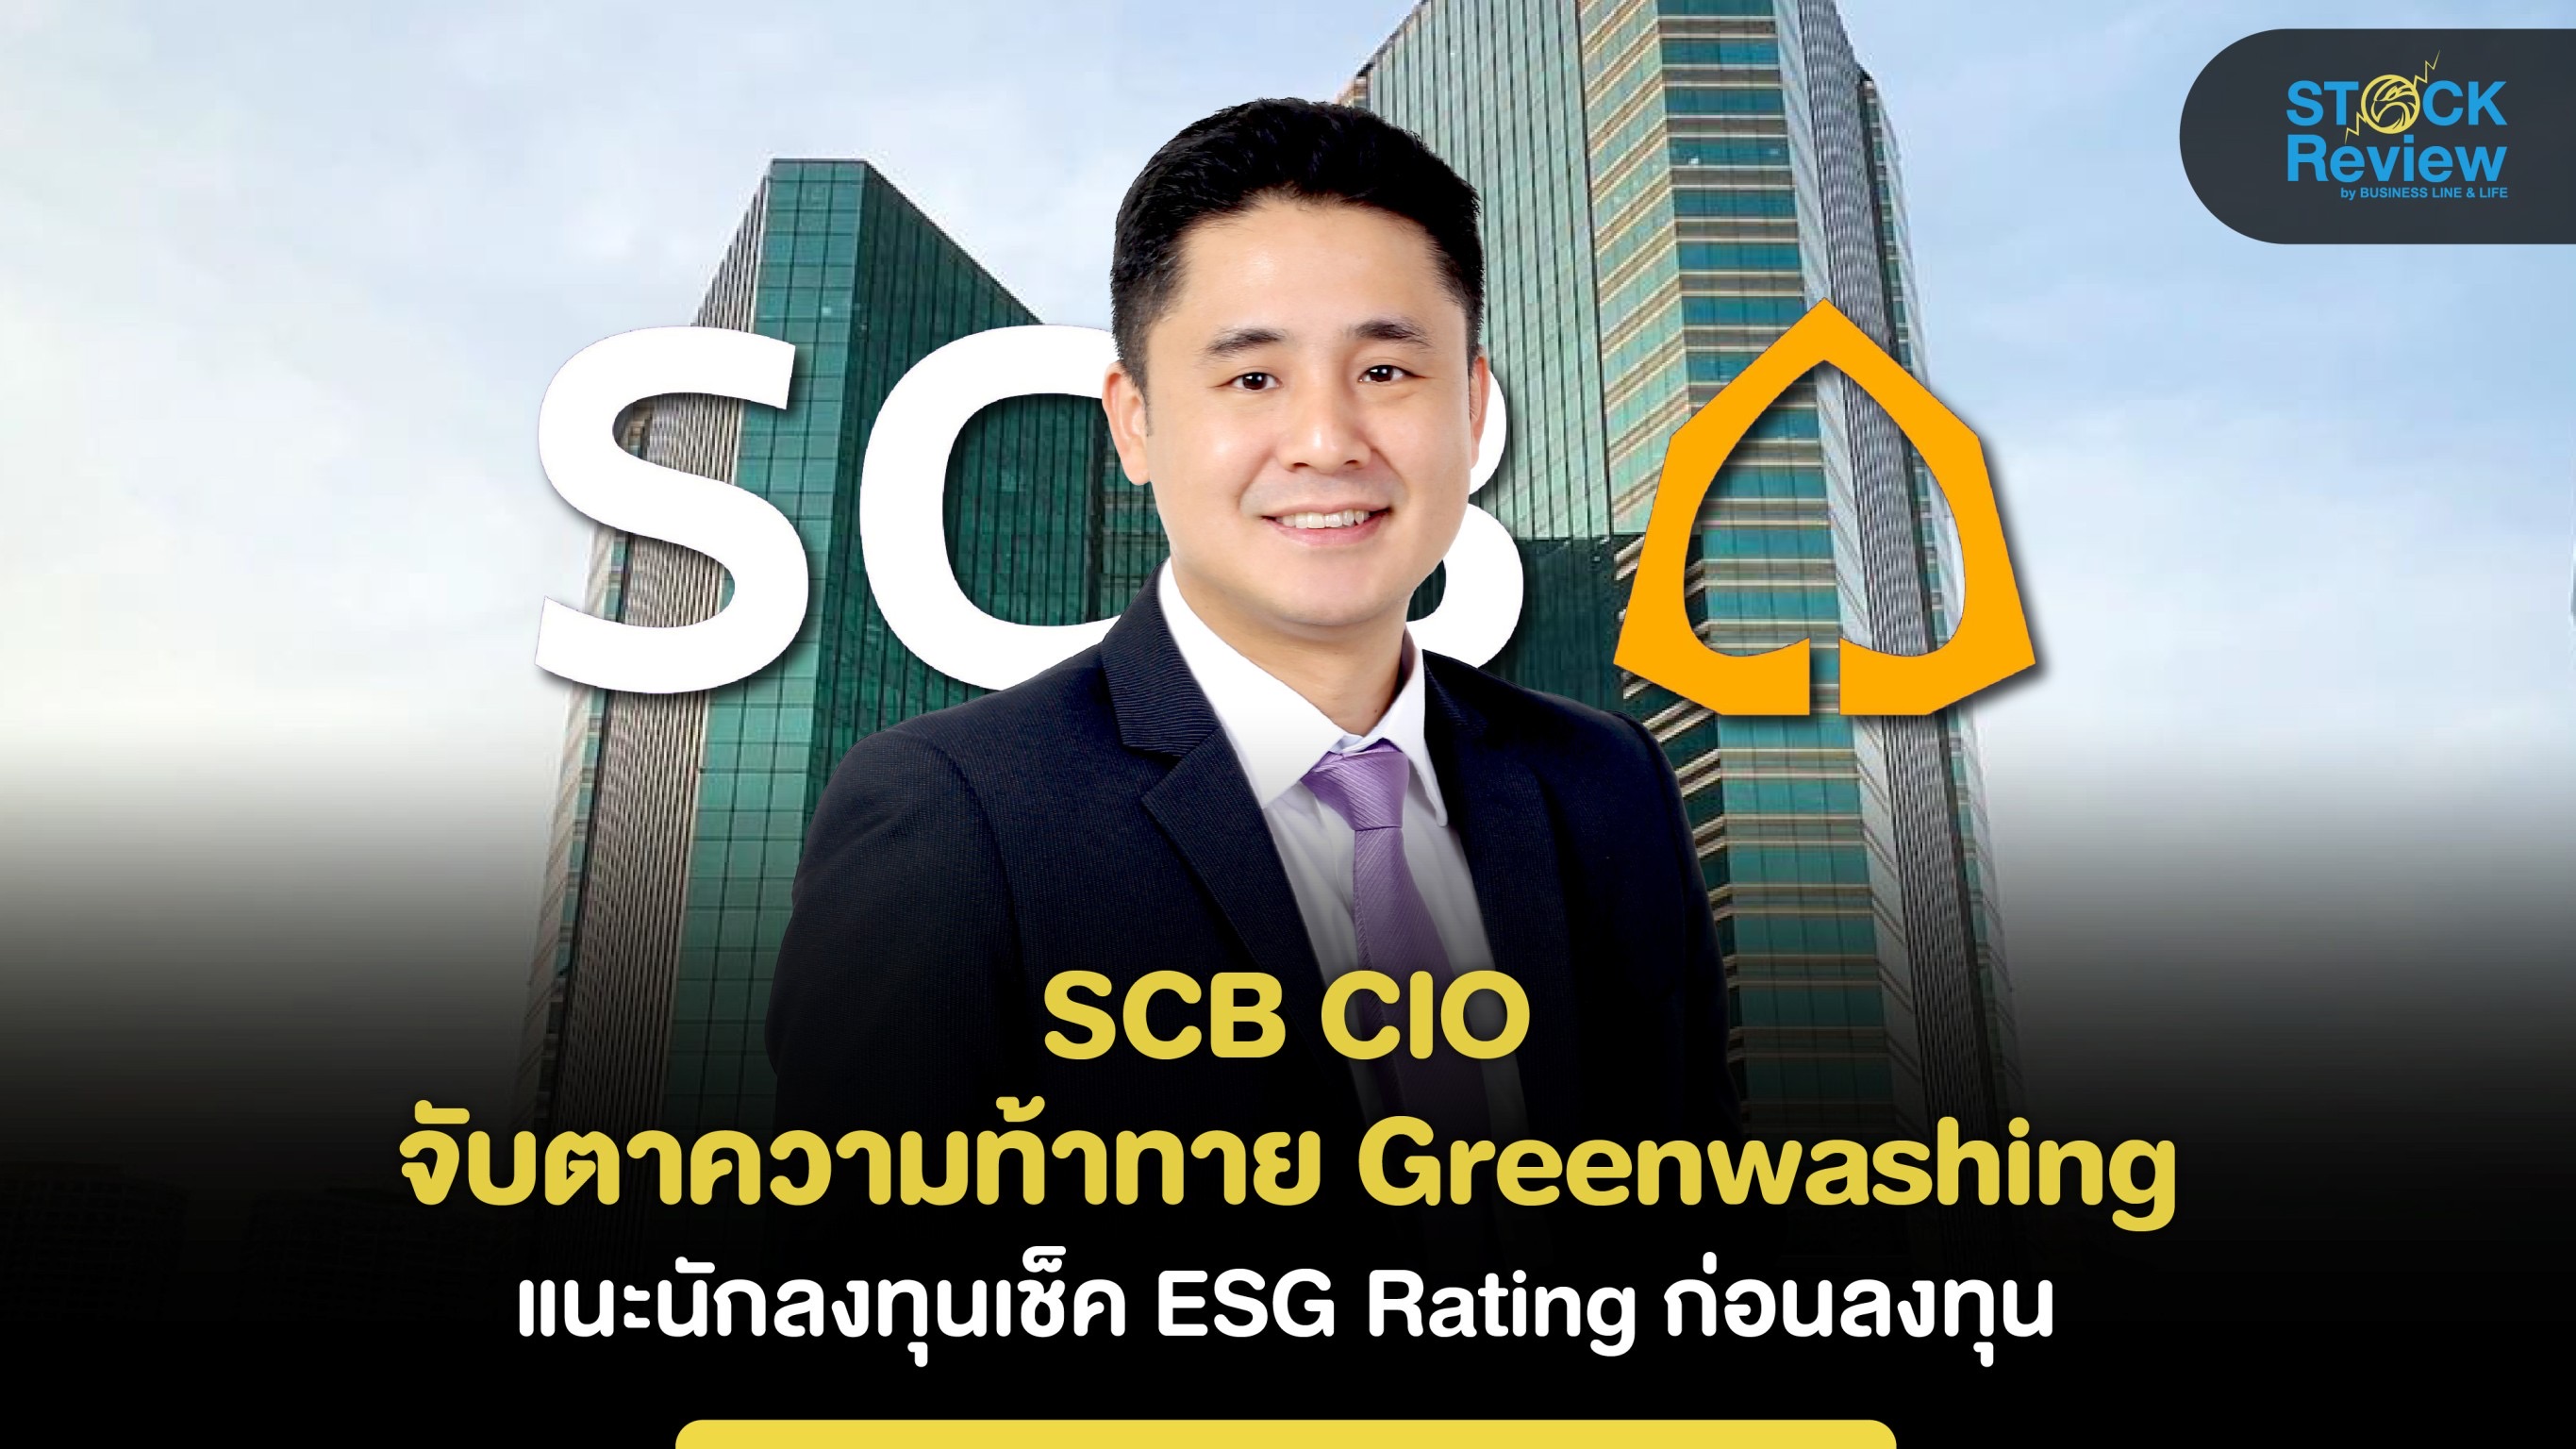 SCB CIO จับตาความท้าทาย Greenwashing แนะนักลงทุนเช็ค ESG Rating ก่อนลงทุน